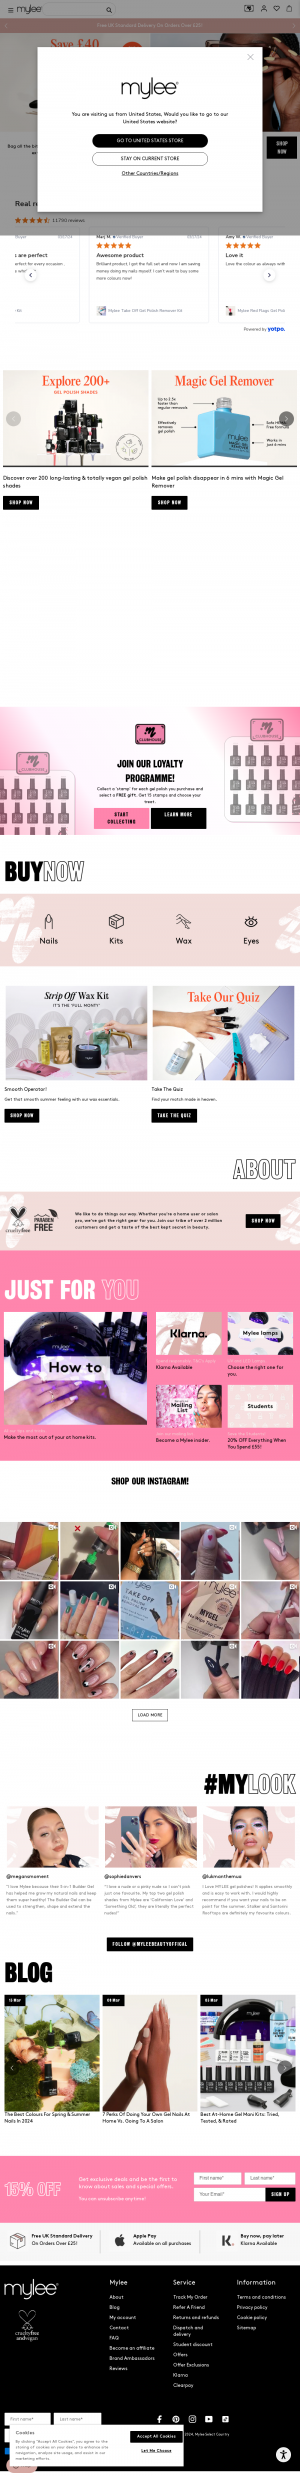 Mylee website appearance